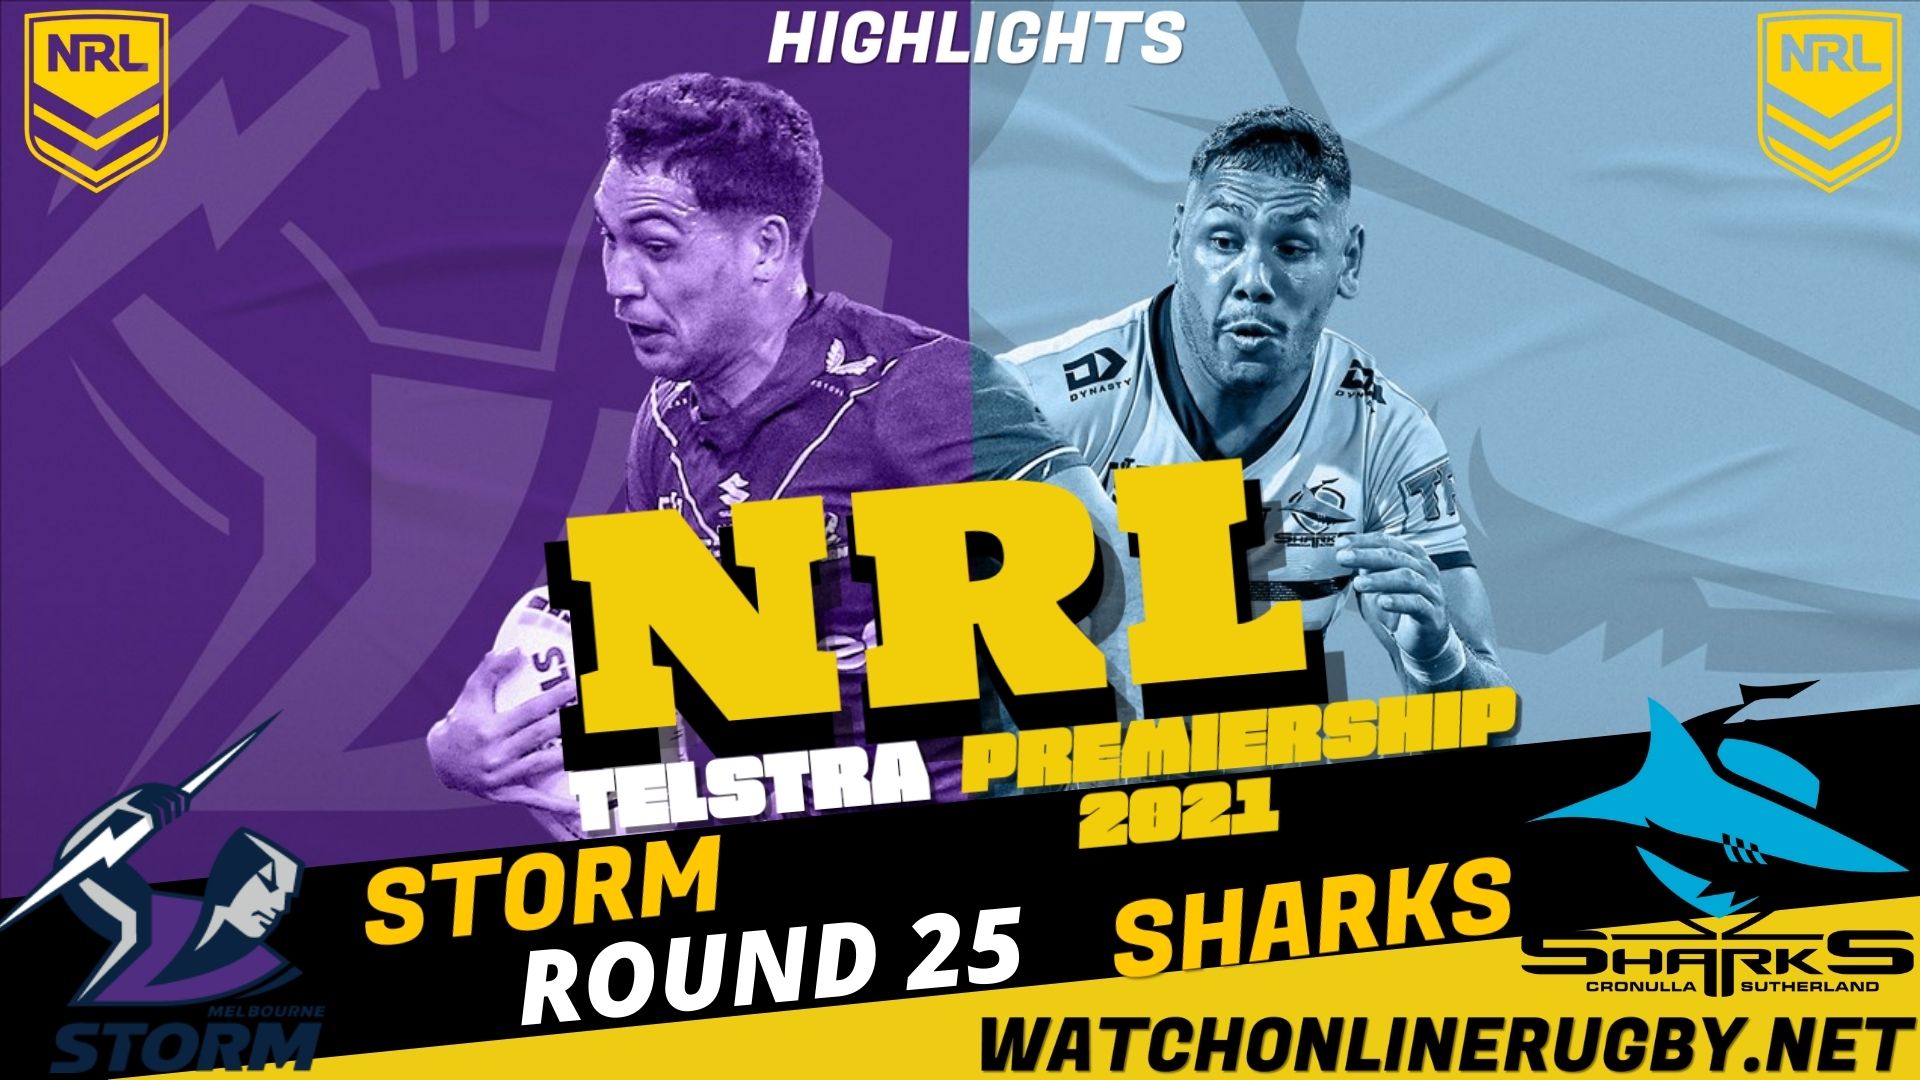 Sharks Vs Storm Highlights RD 25 NRL Rugby